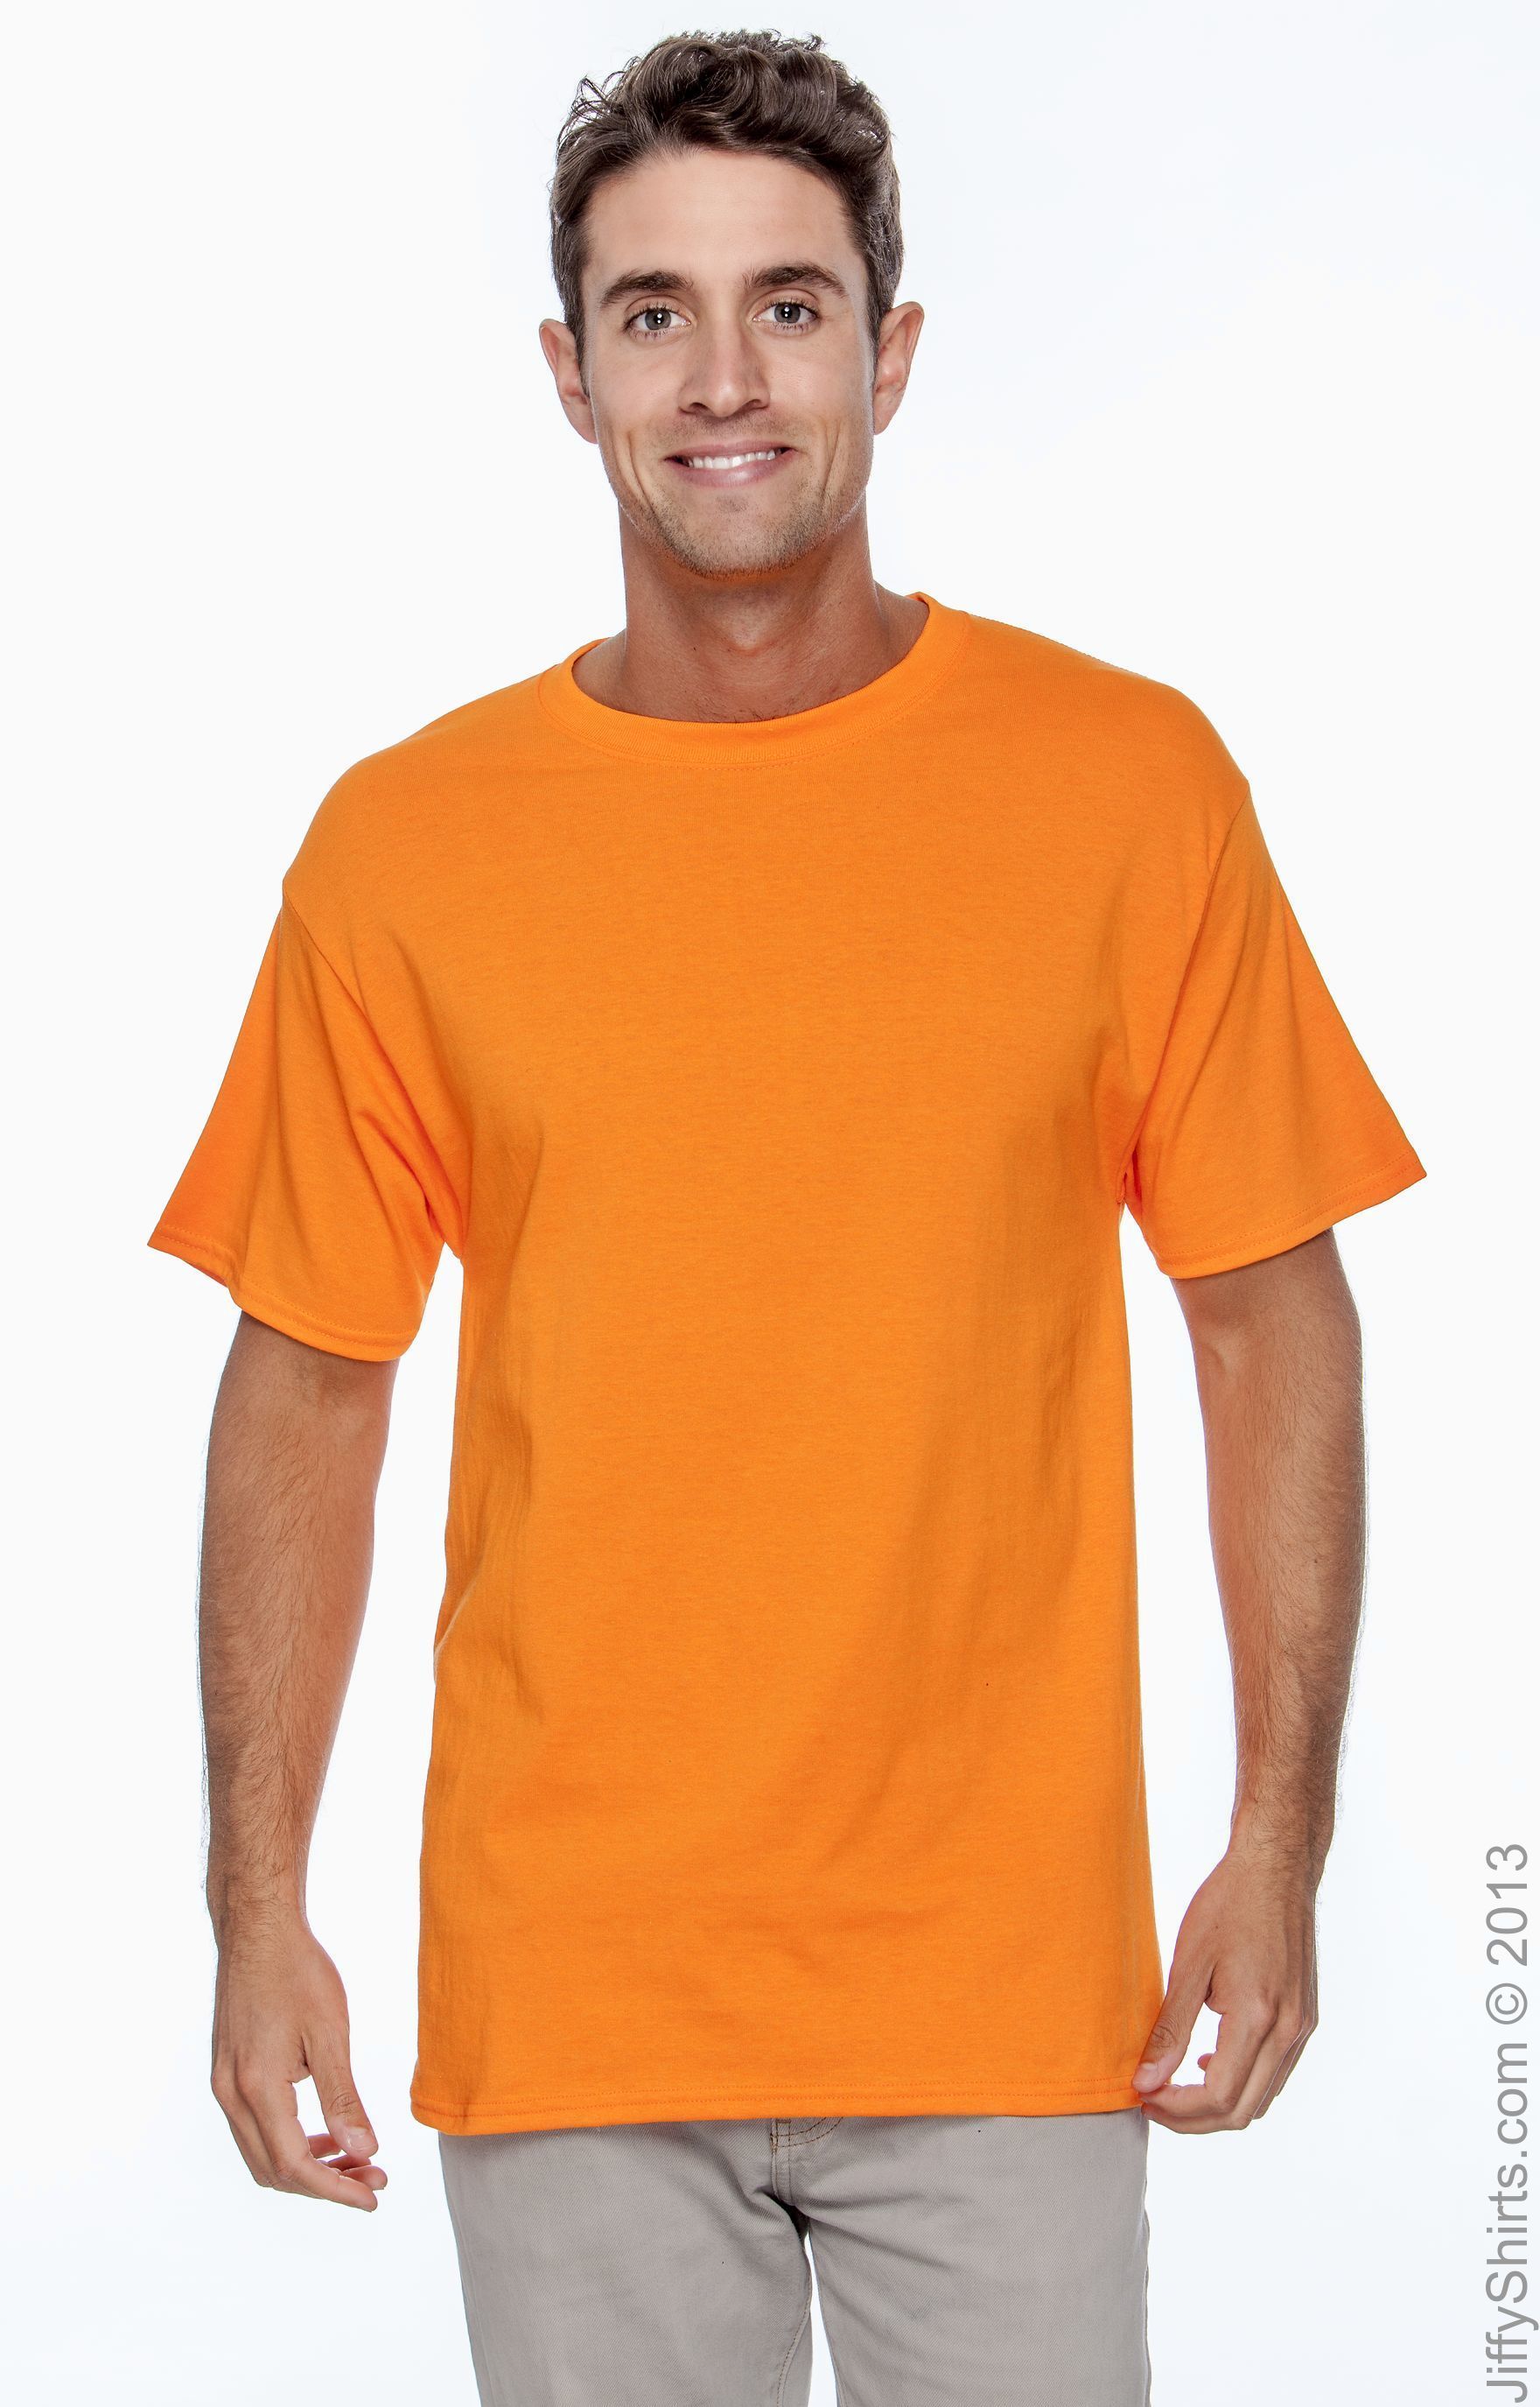 safety orange t shirt